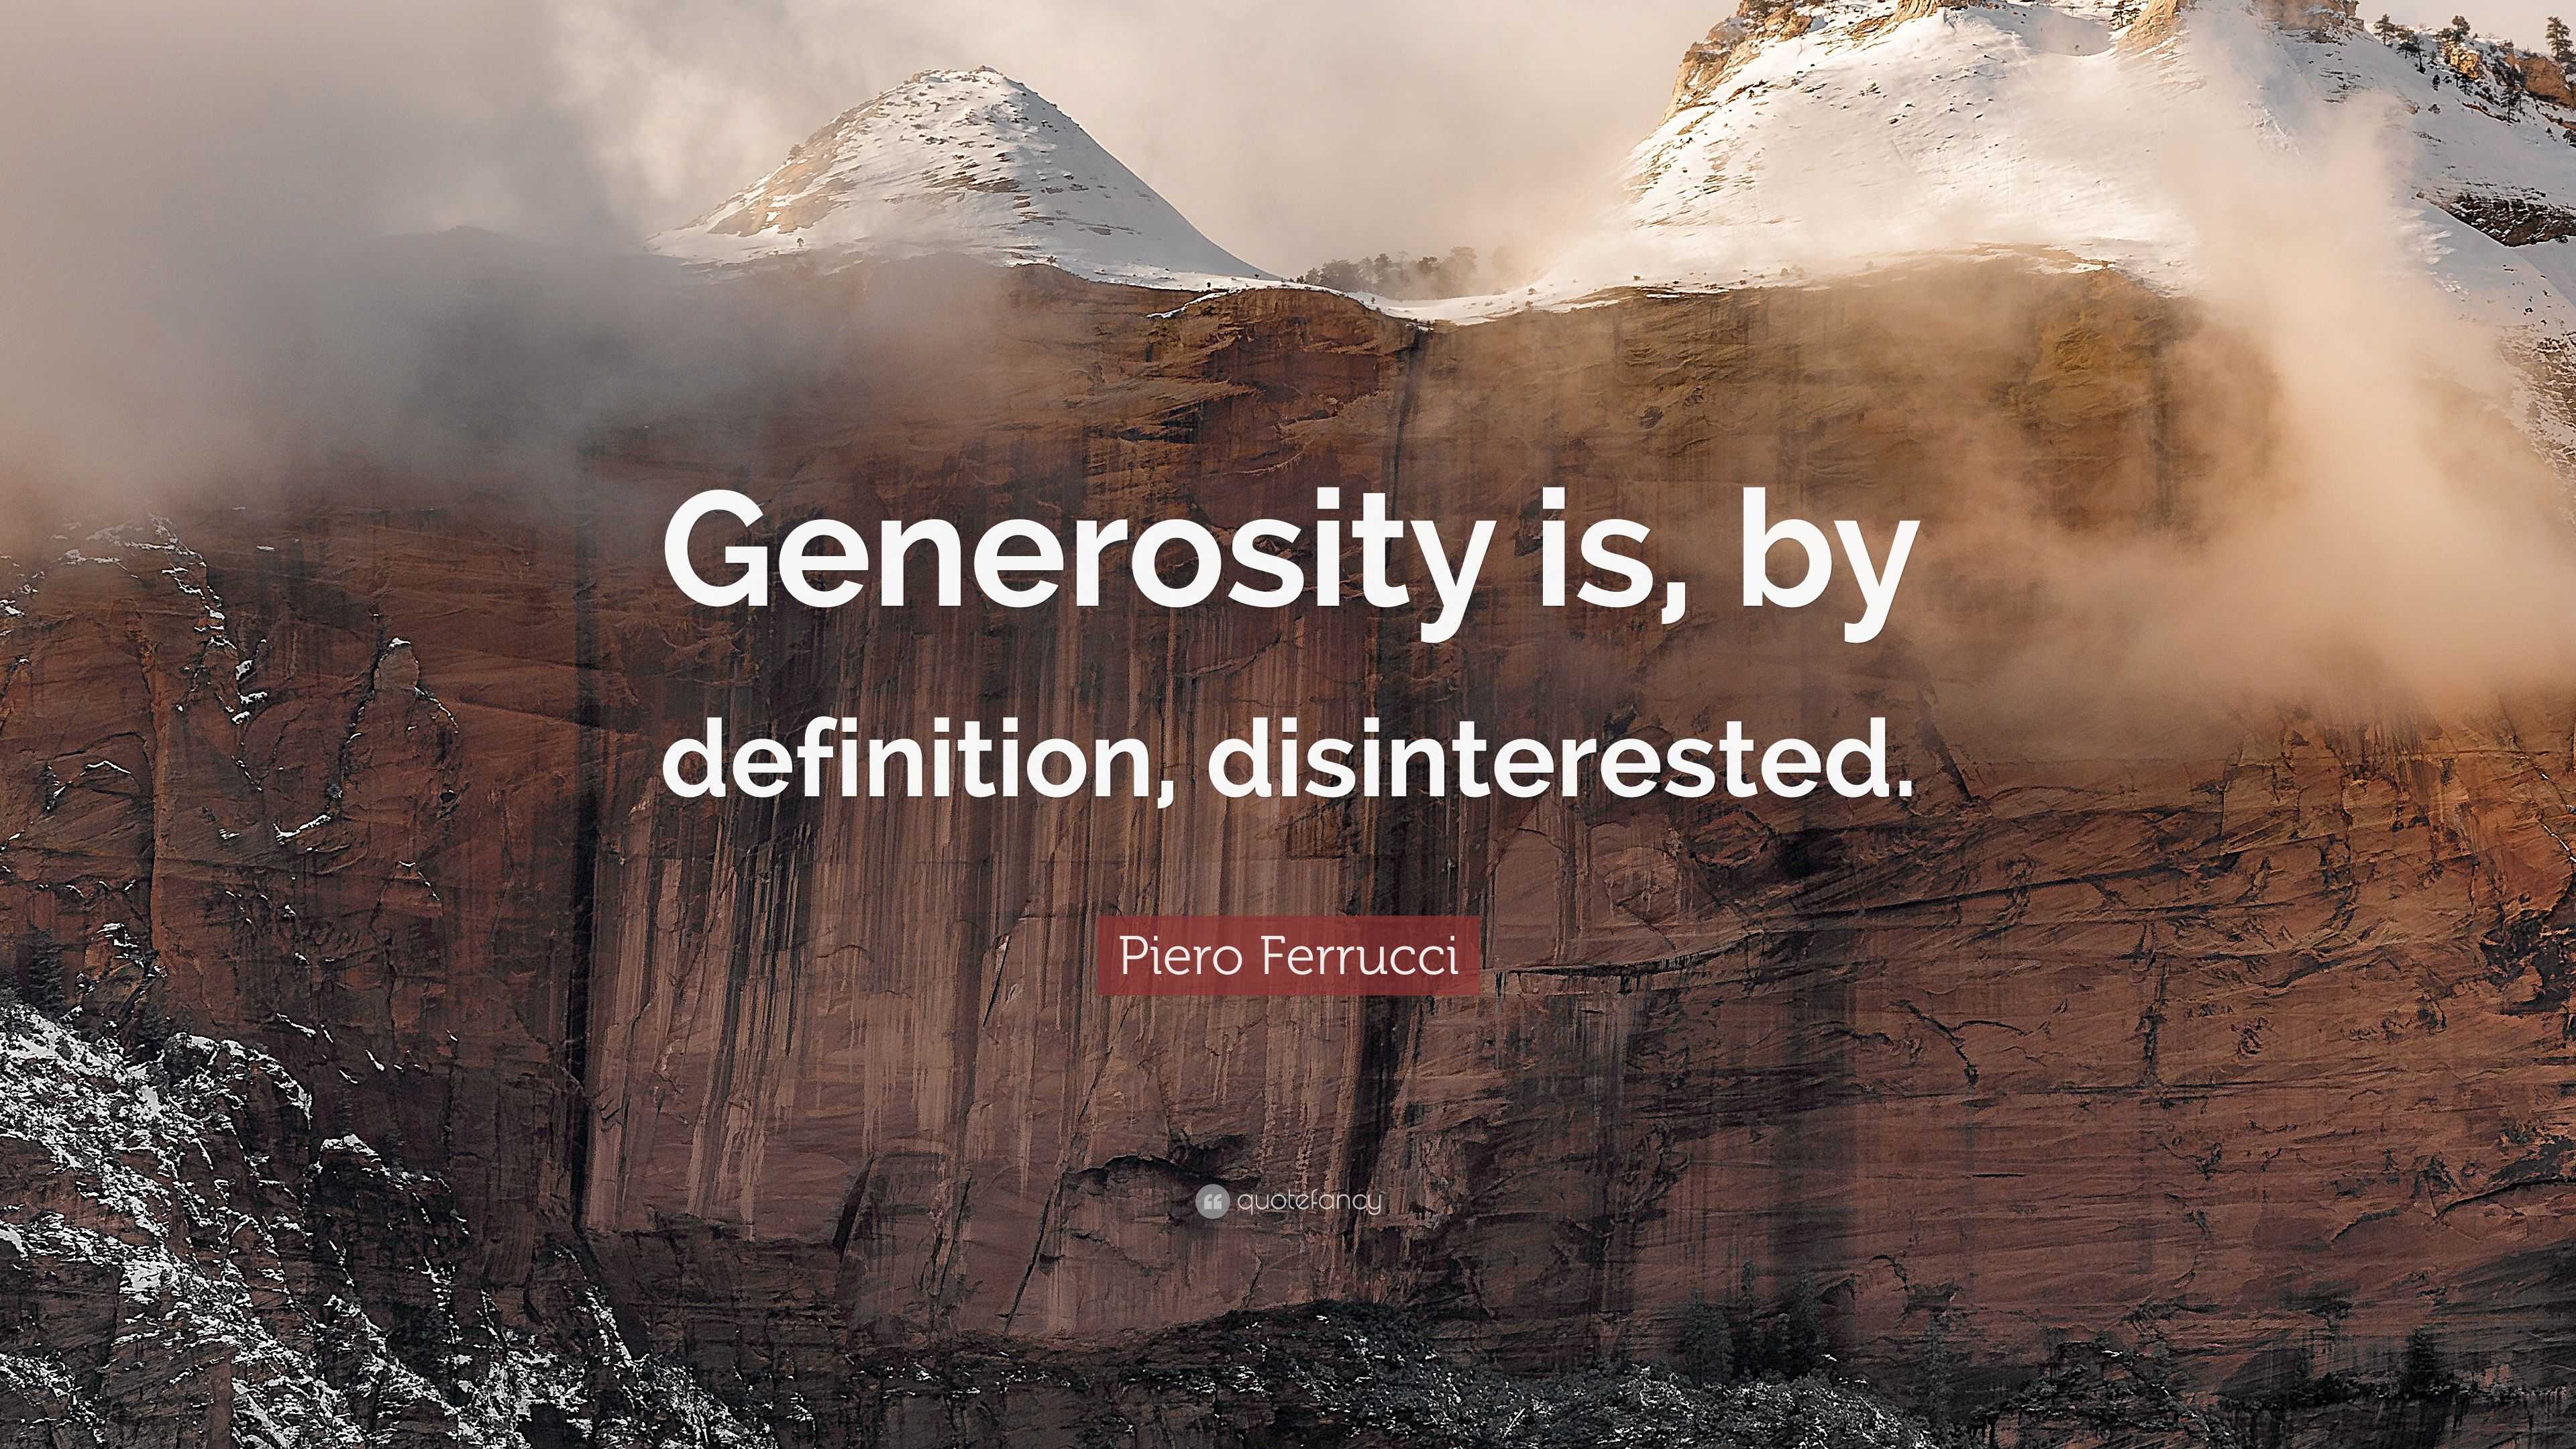 piero ferrucci quote: “generosity is, by definition, disinterested